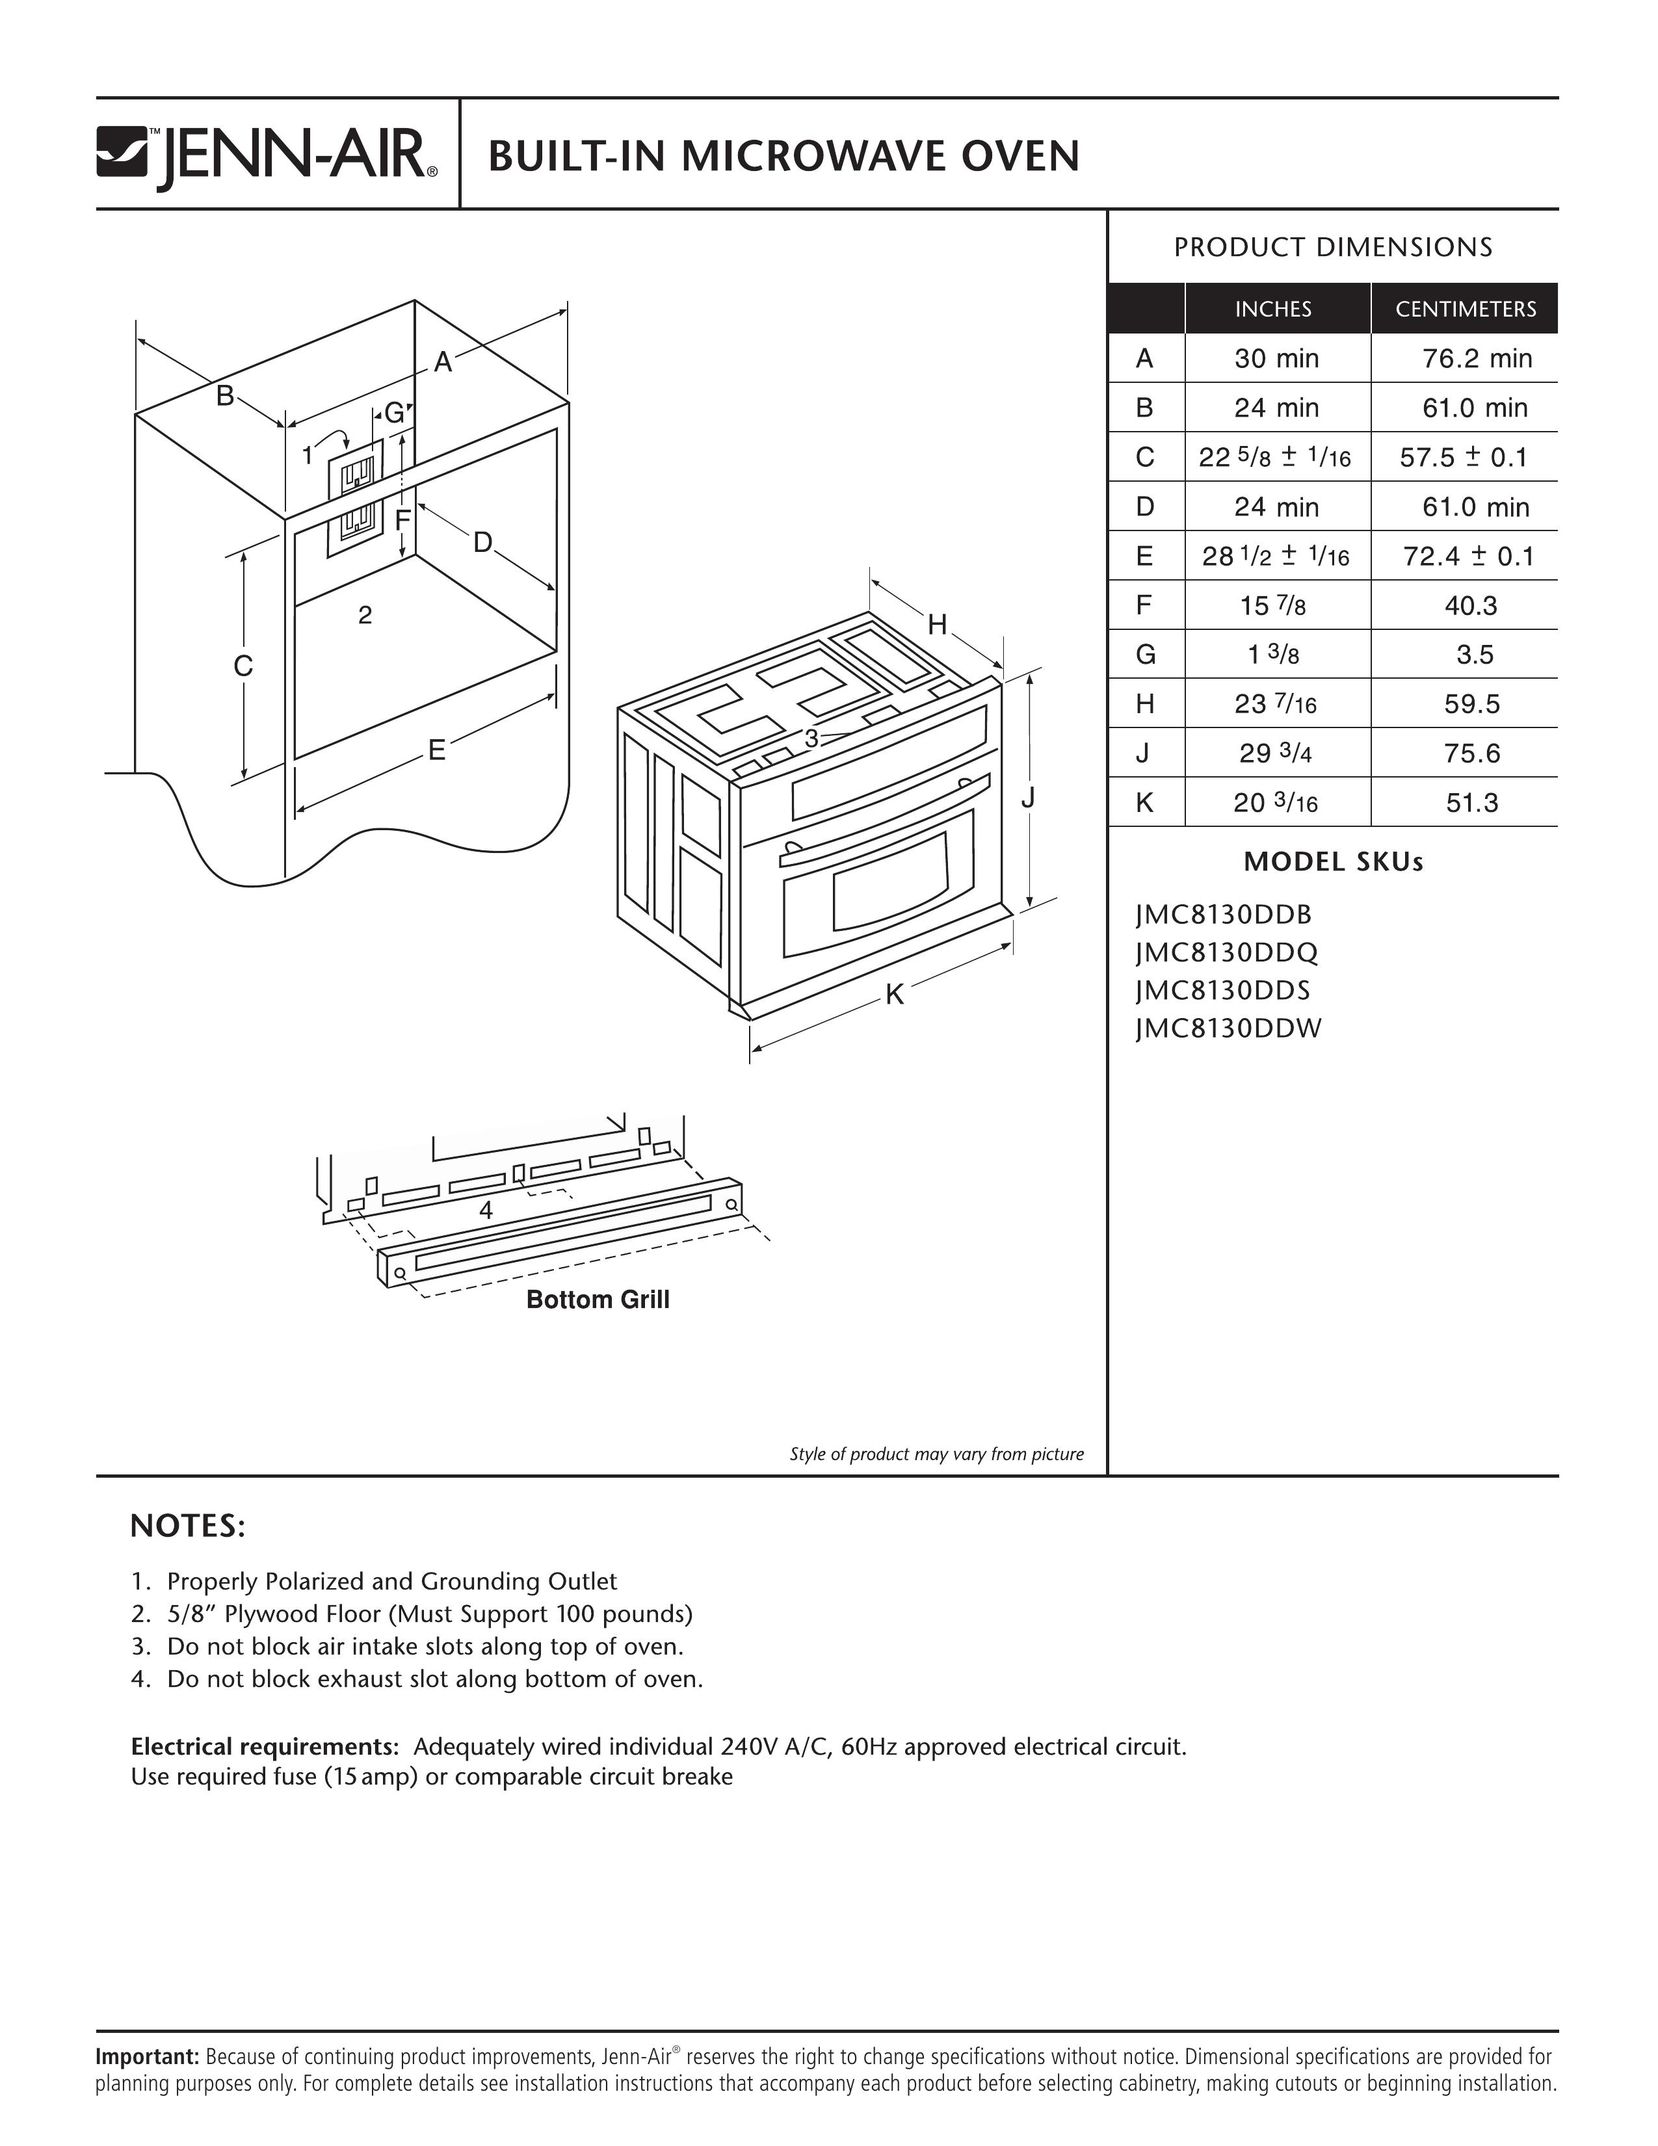 Jenn-Air JMC8130DDB Microwave Oven User Manual